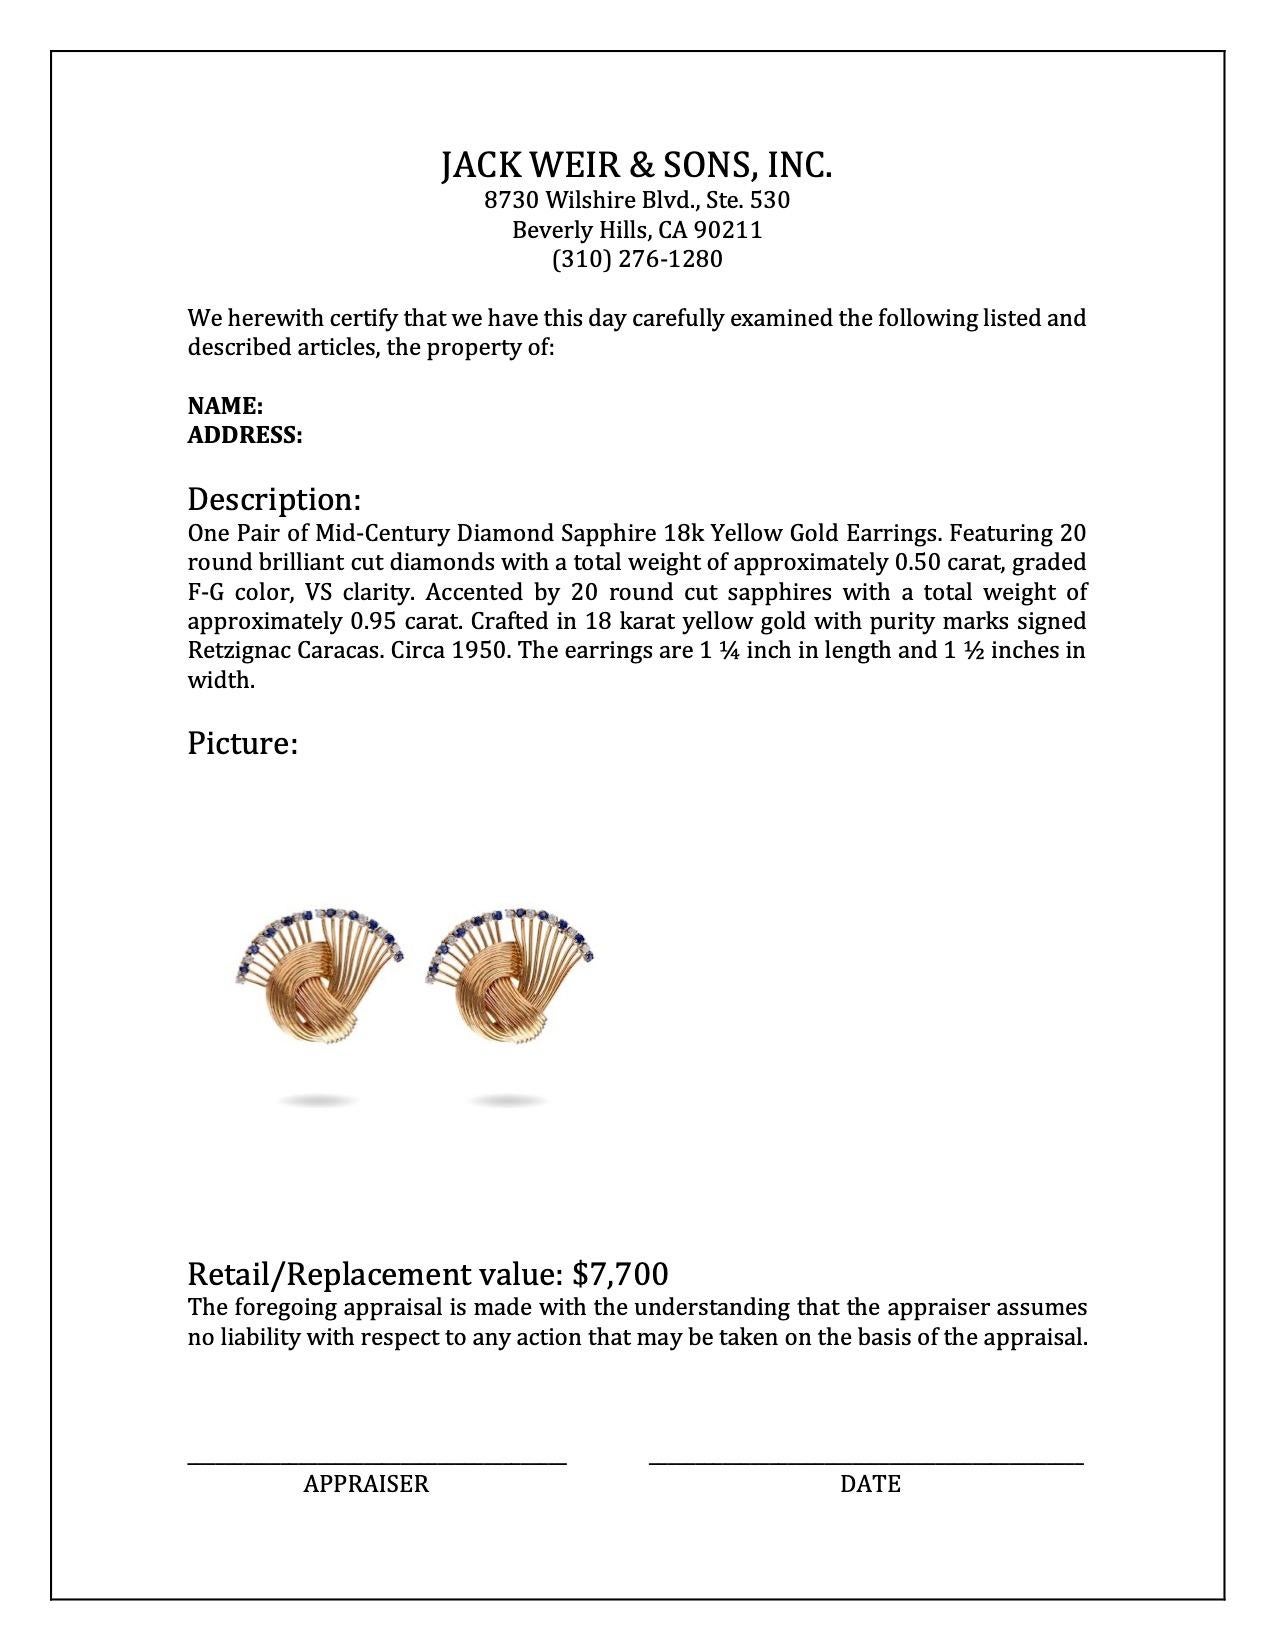 Women's or Men's Pair of Mid-Century Diamond Sapphire 18k Yellow Gold Earrings For Sale